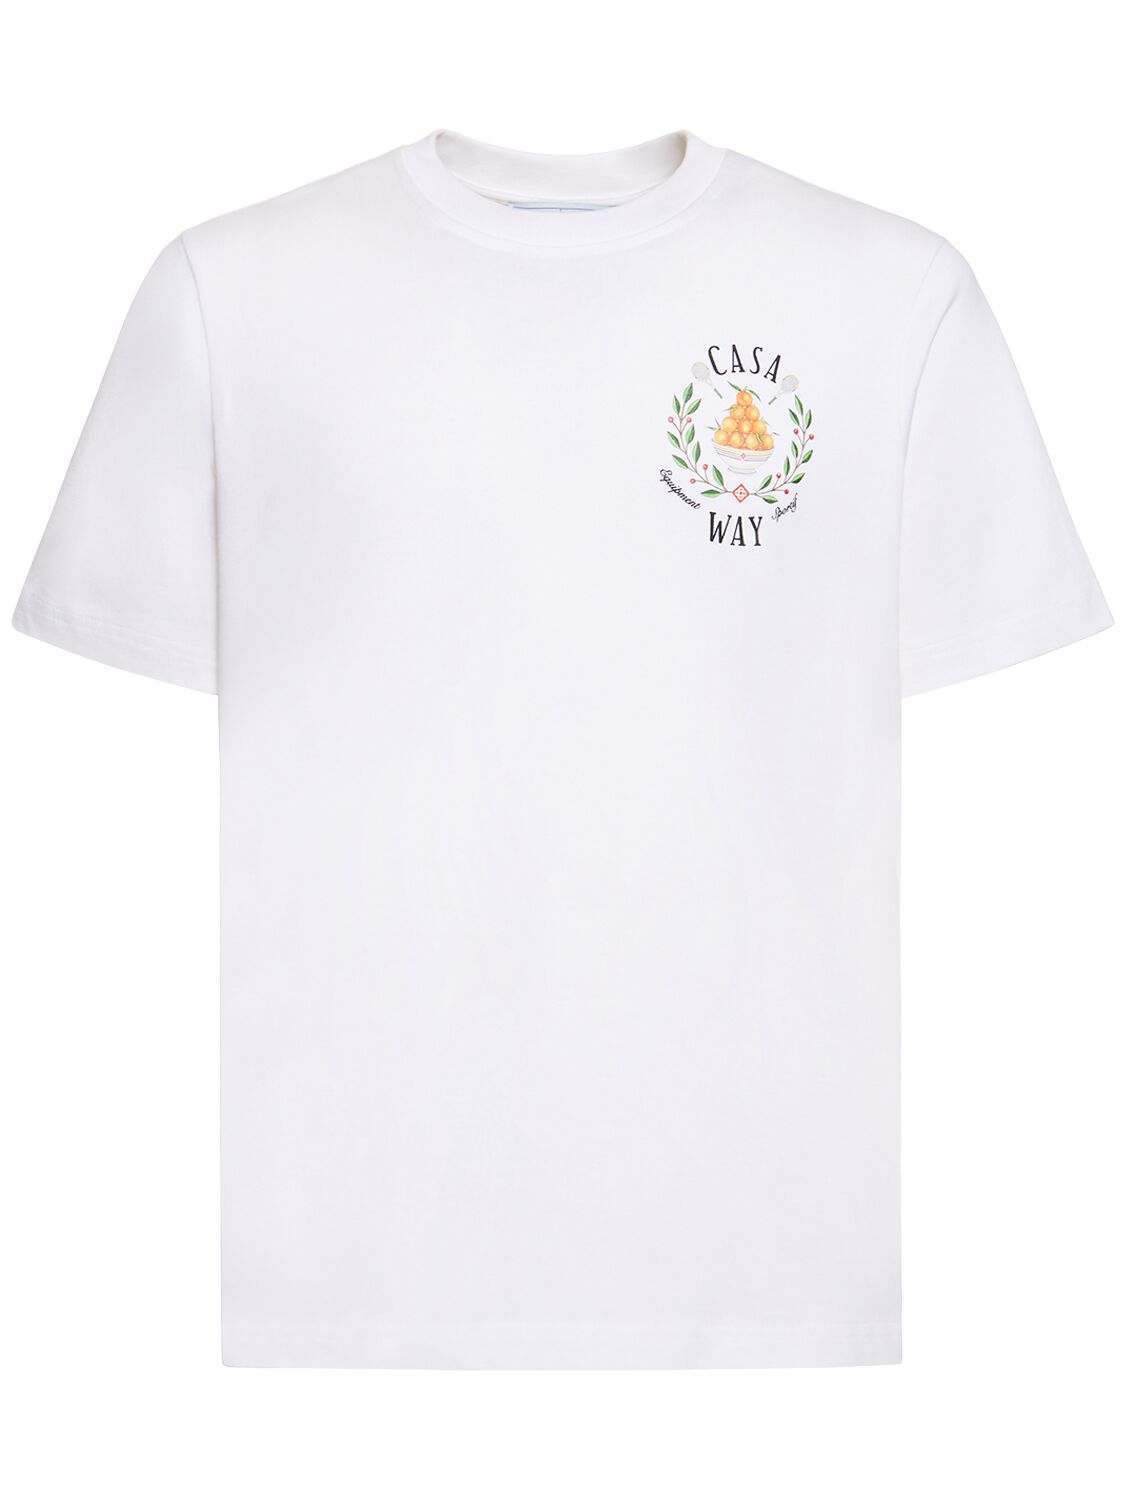 Casa Way Organic Cotton T-shirt